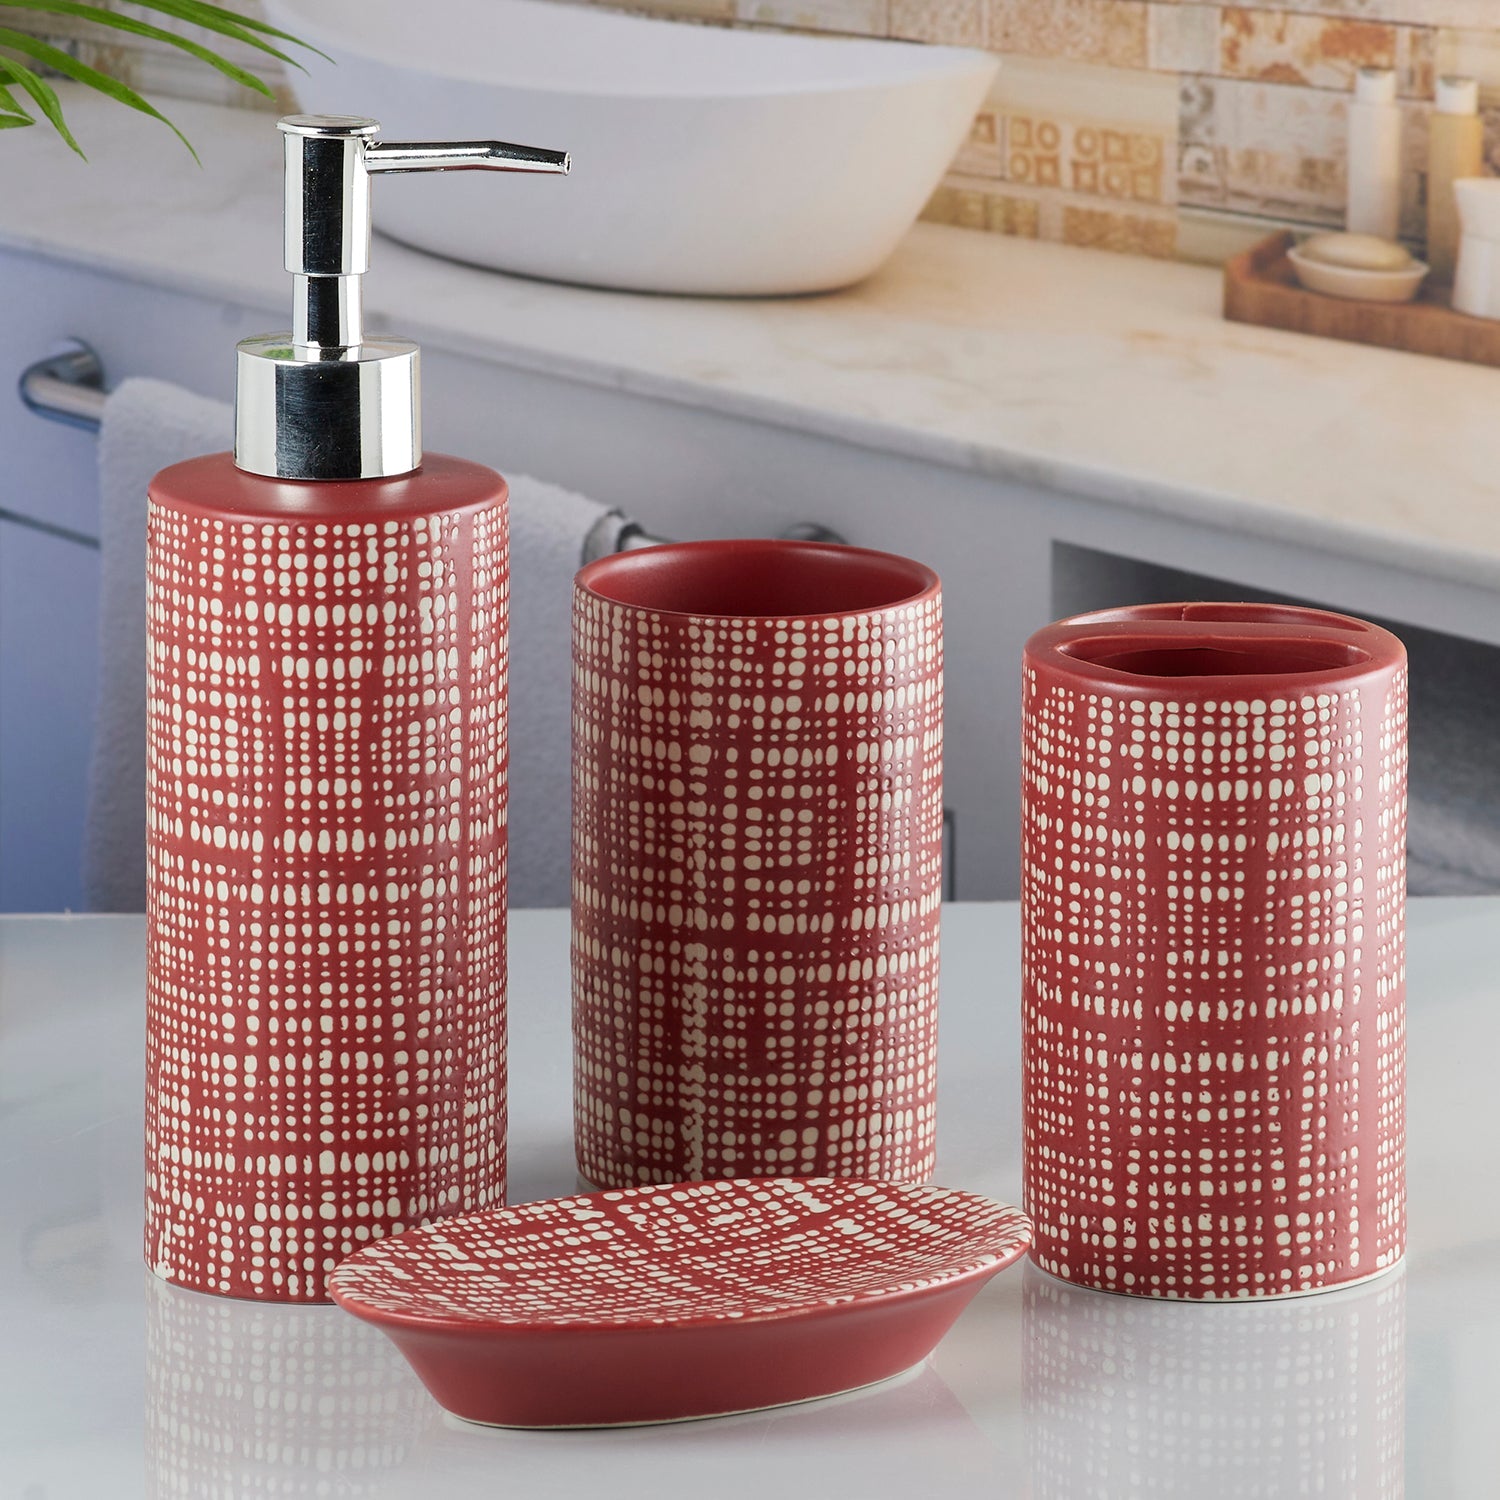 Ceramic Bathroom Accessories Set of 4 Bath Set with Soap Dispenser (5748)